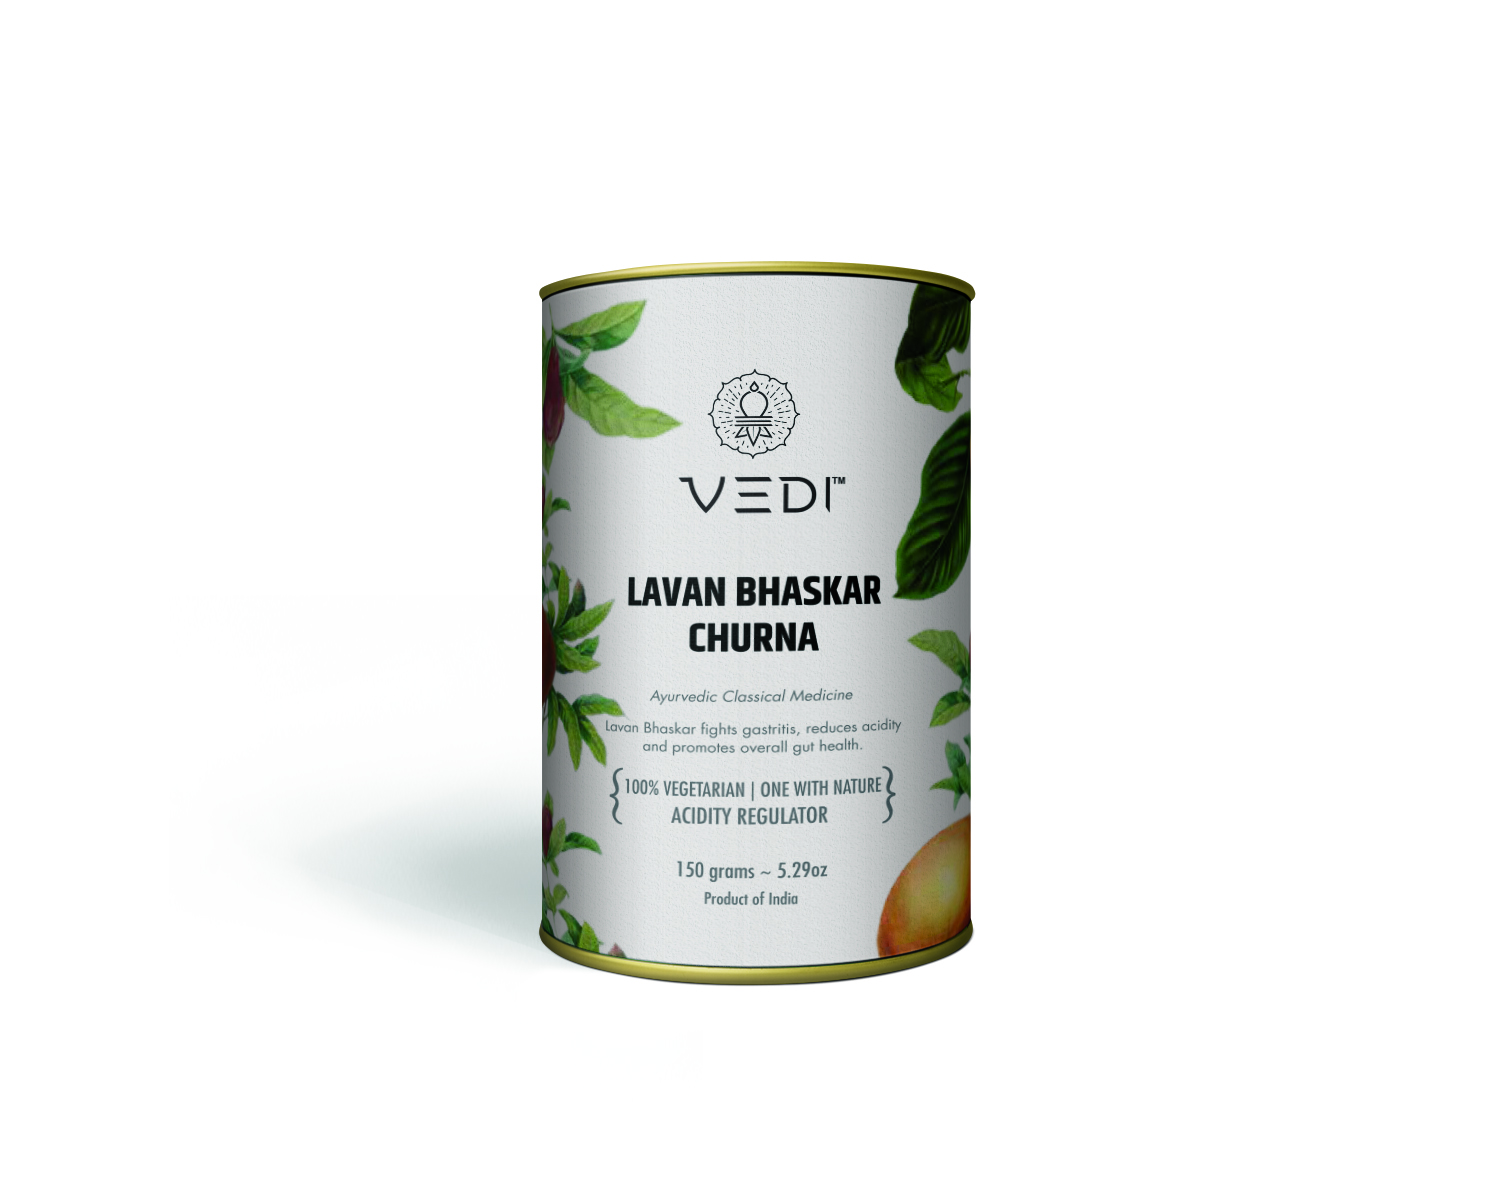 Buy Vedi Herbal Lavan Bhaskar Churna at Best Price Online